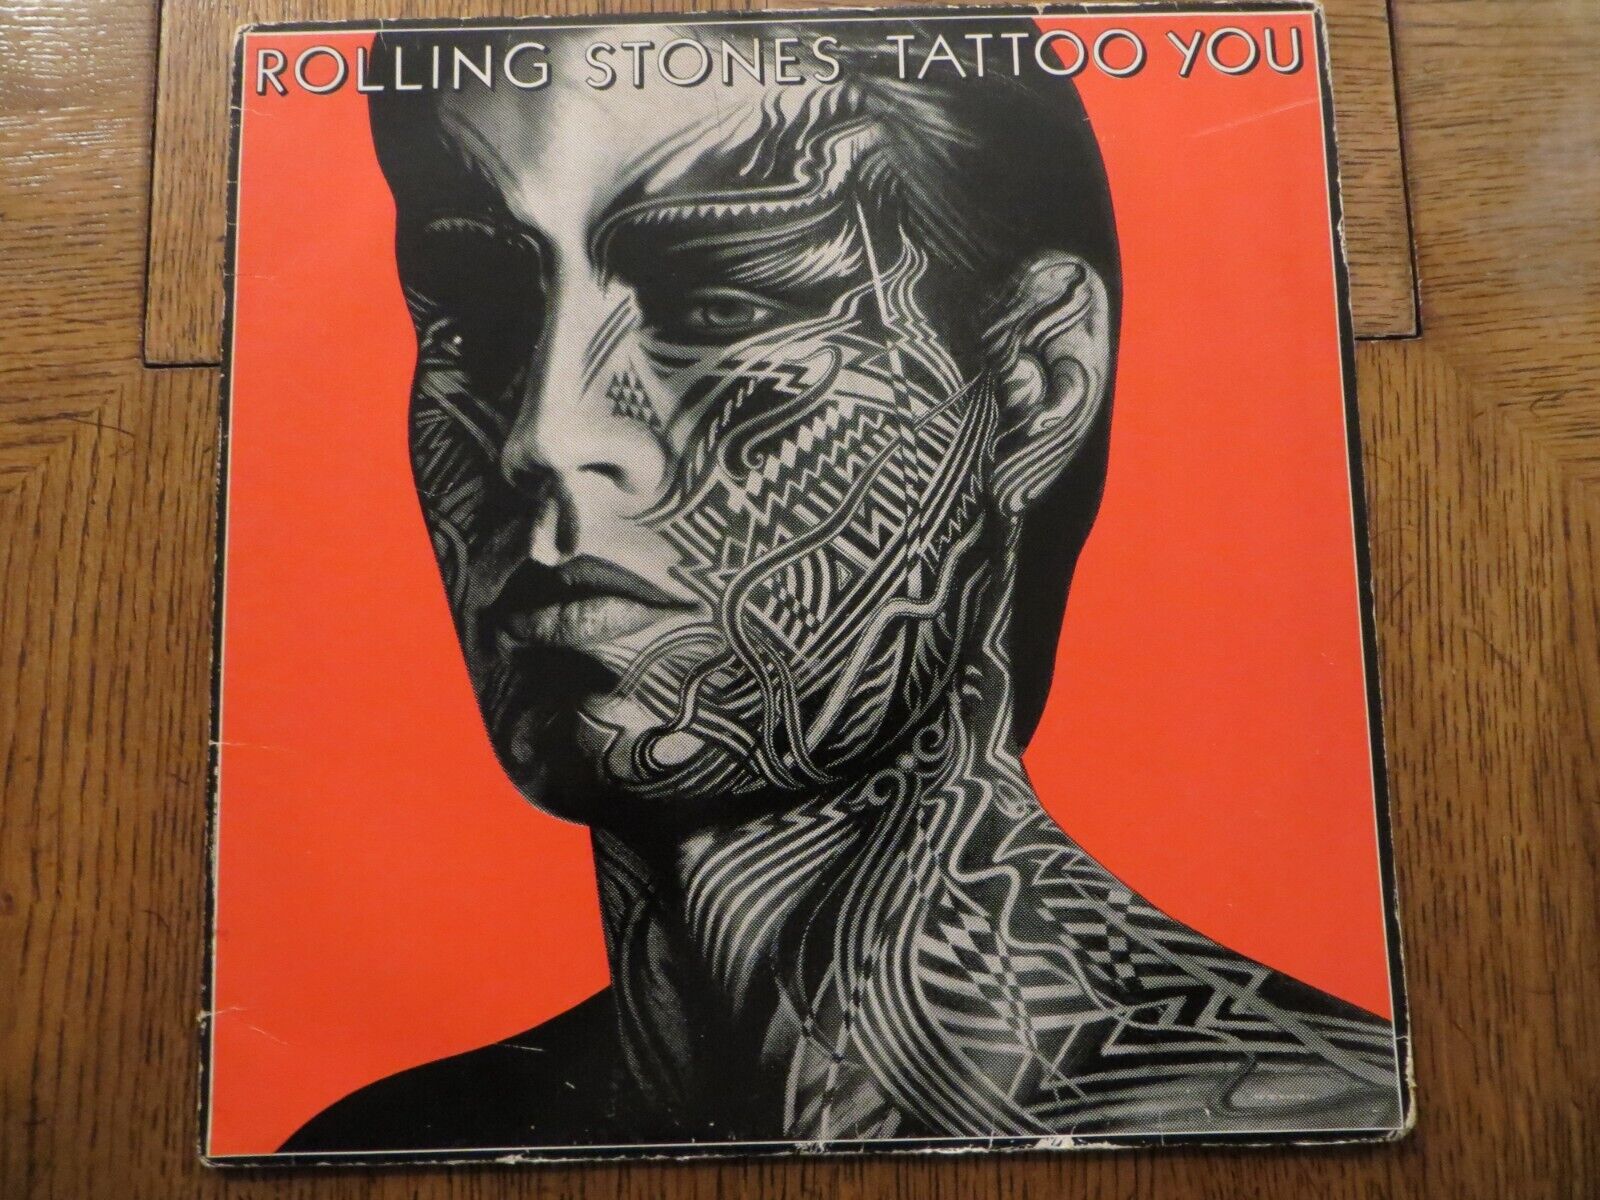 Rolling Stones – Tattoo You - 1981 - Rolling Stones Records COC 16052 Vinyl LP